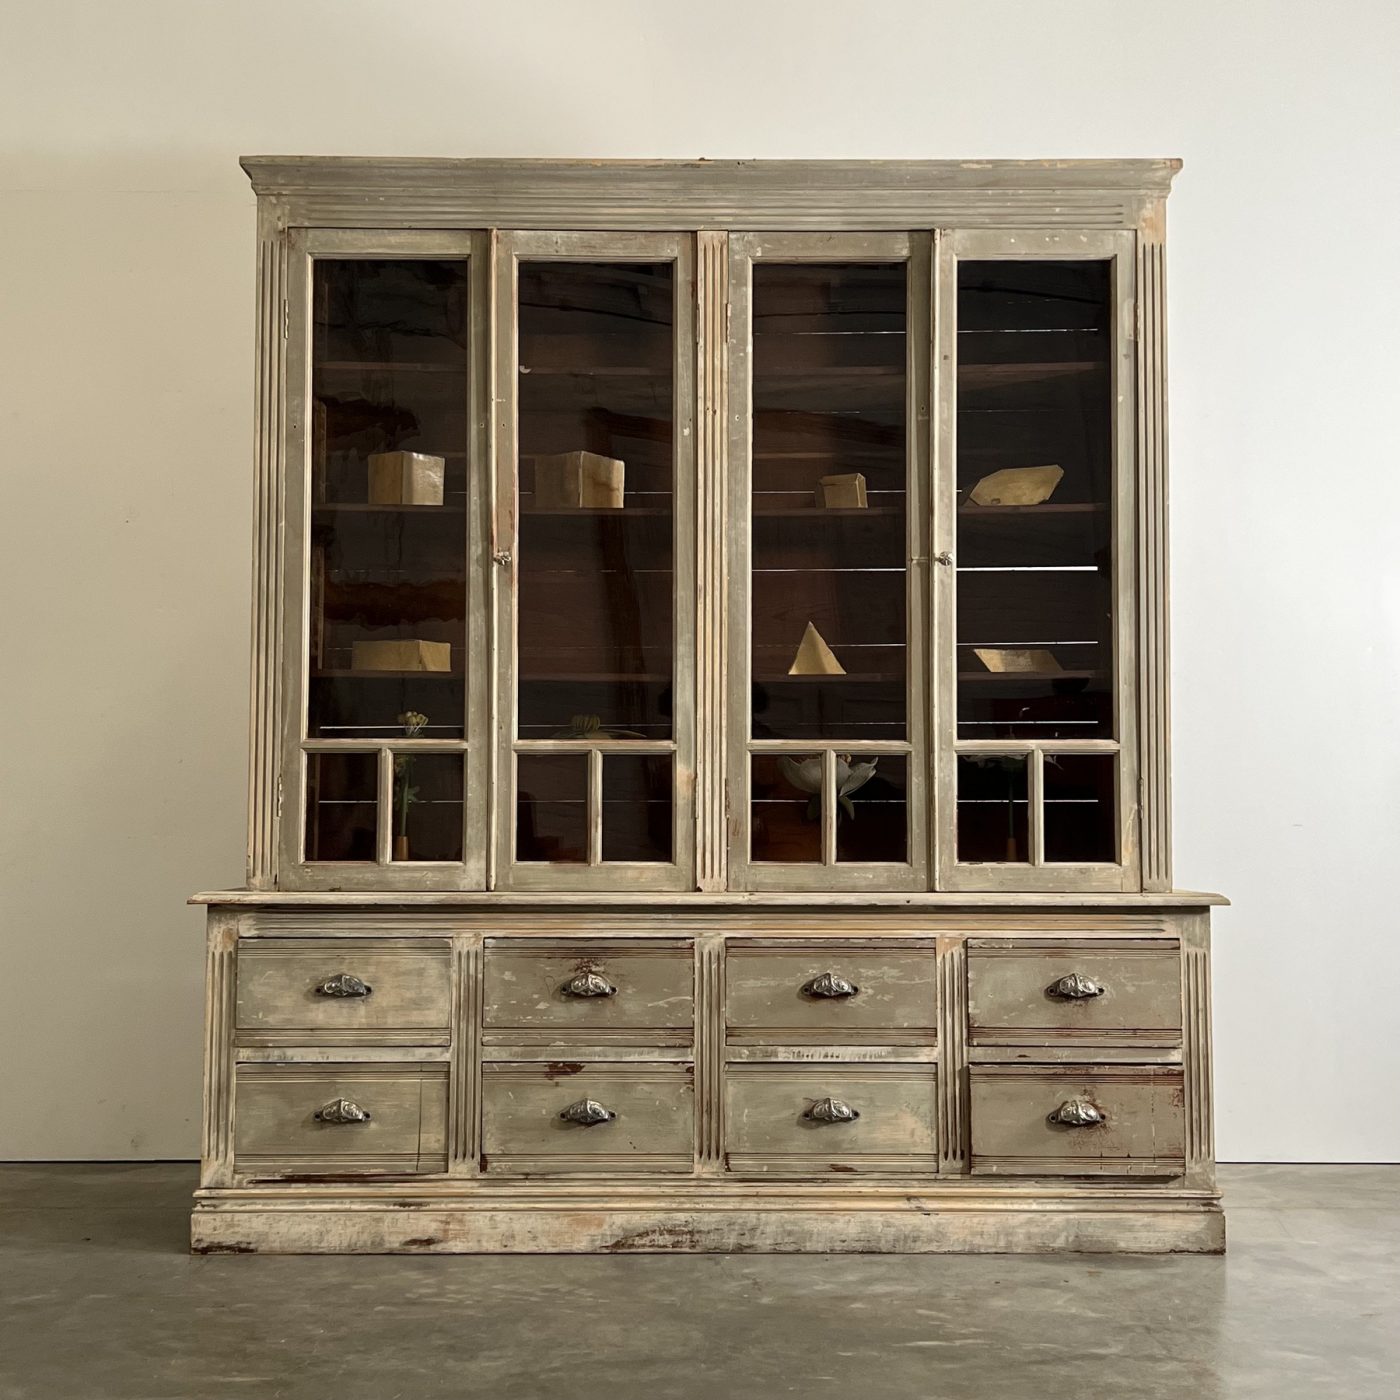 objet-vagabond-painted-cabinet0011